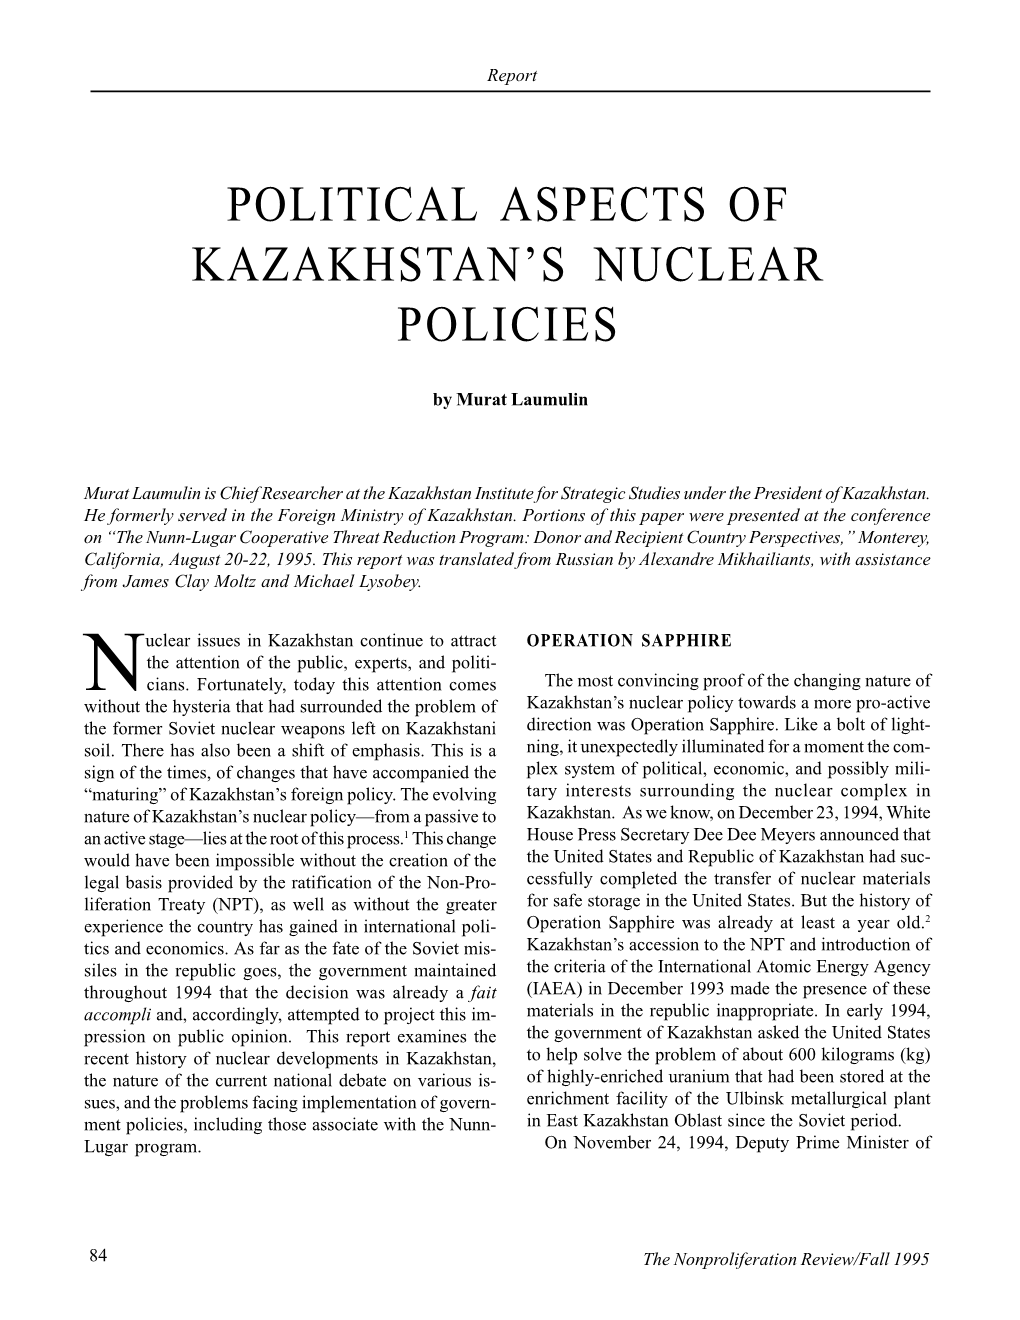 Npr 3.1: Political Aspects of Kazakhstan's Nuclear